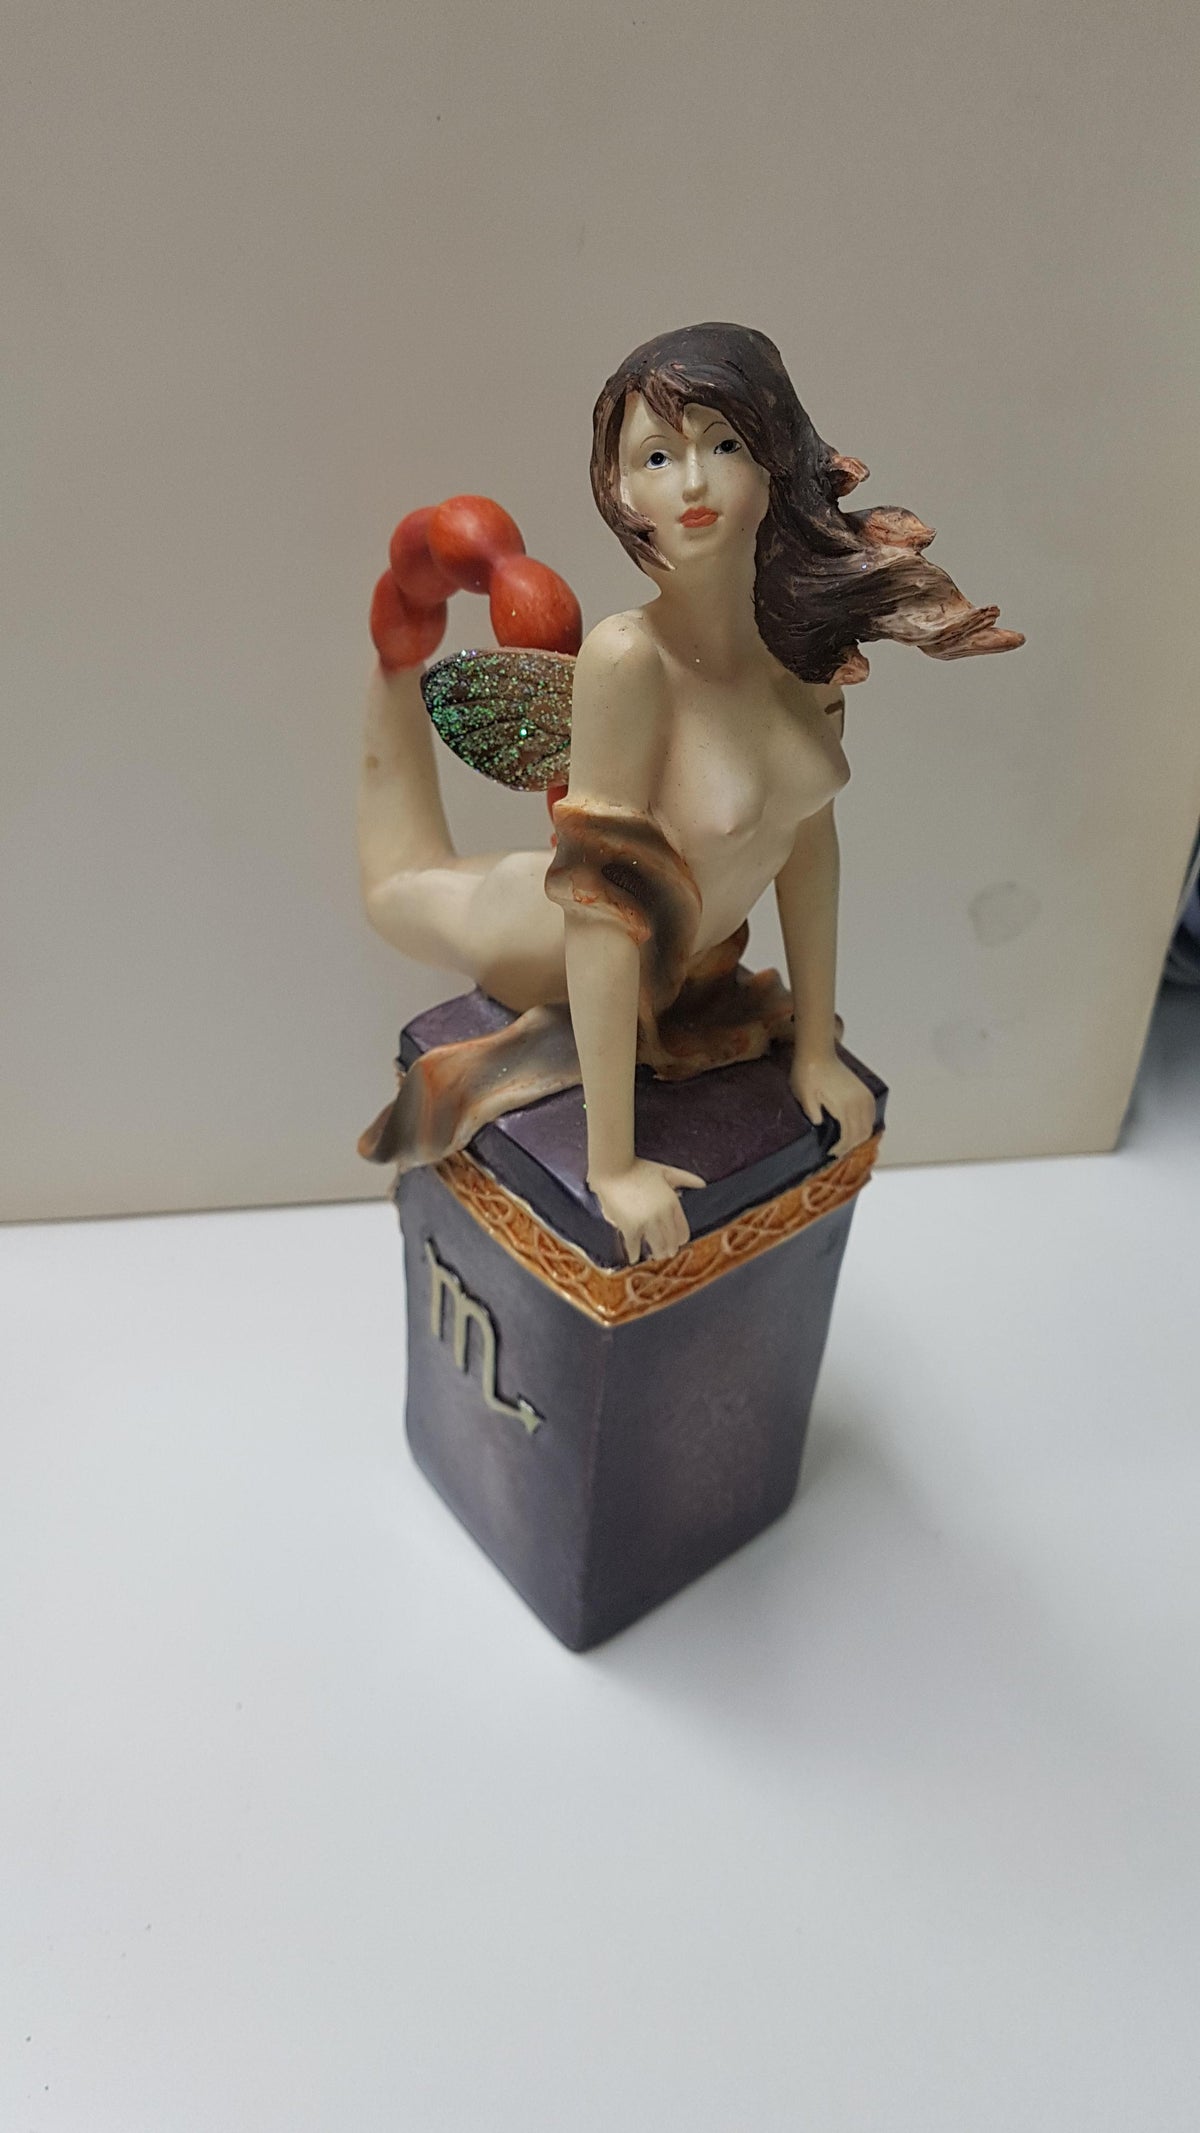 Figura de fantasia: Hada con cola de escorpion sobre un pedestal